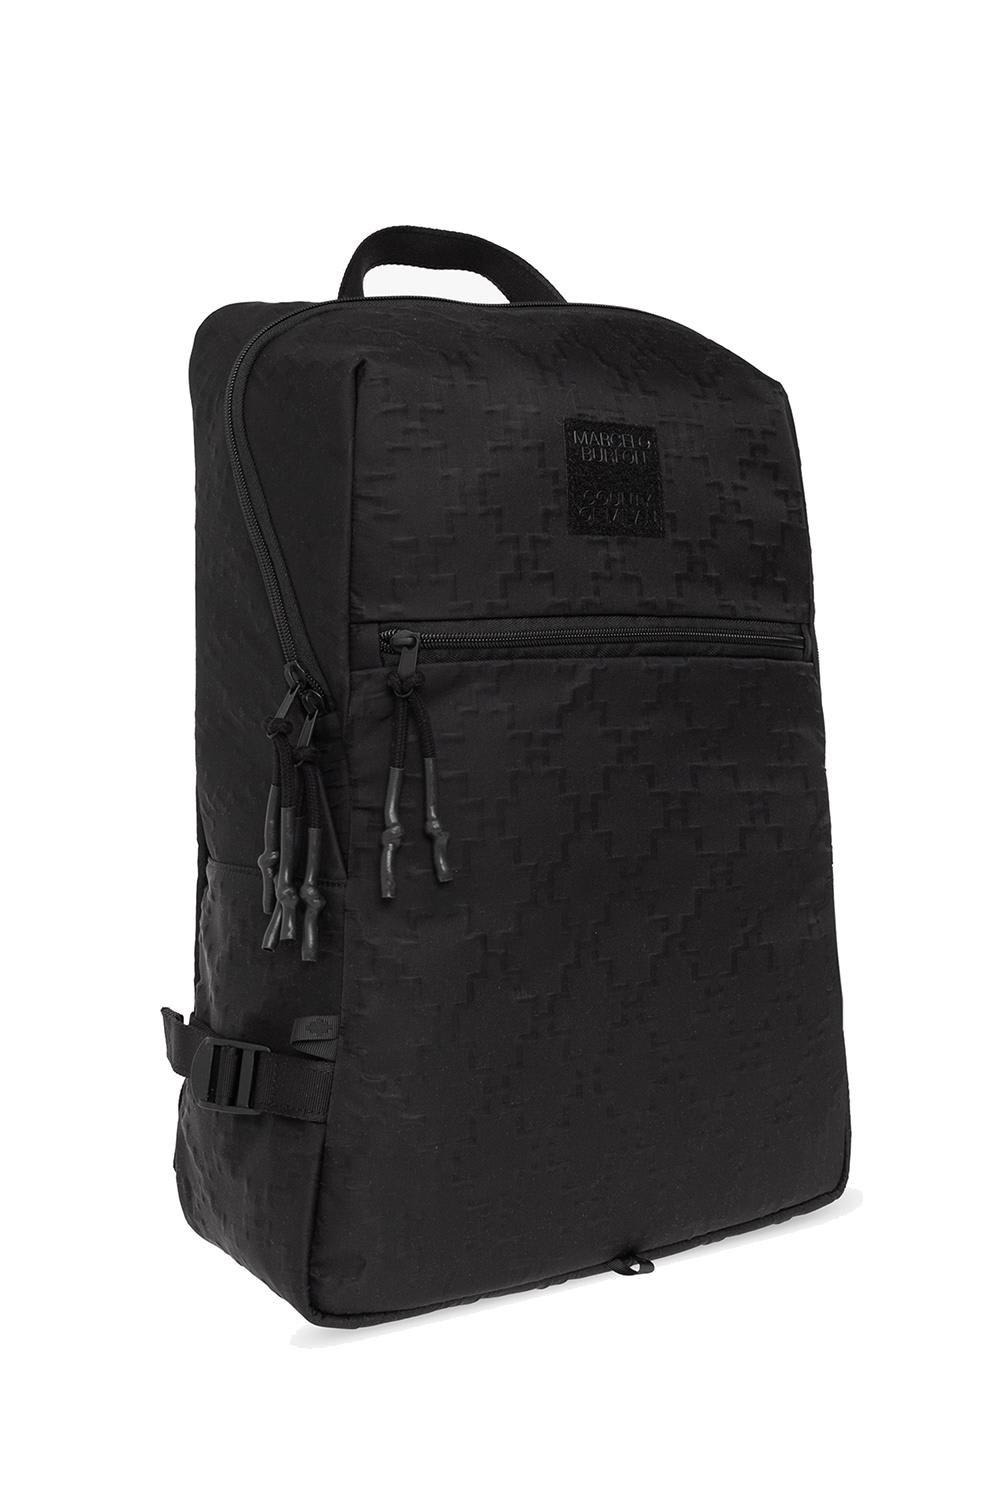 Shop Marcelo Burlon County Of Milan Logo Patch Zipped Backpack In Nero